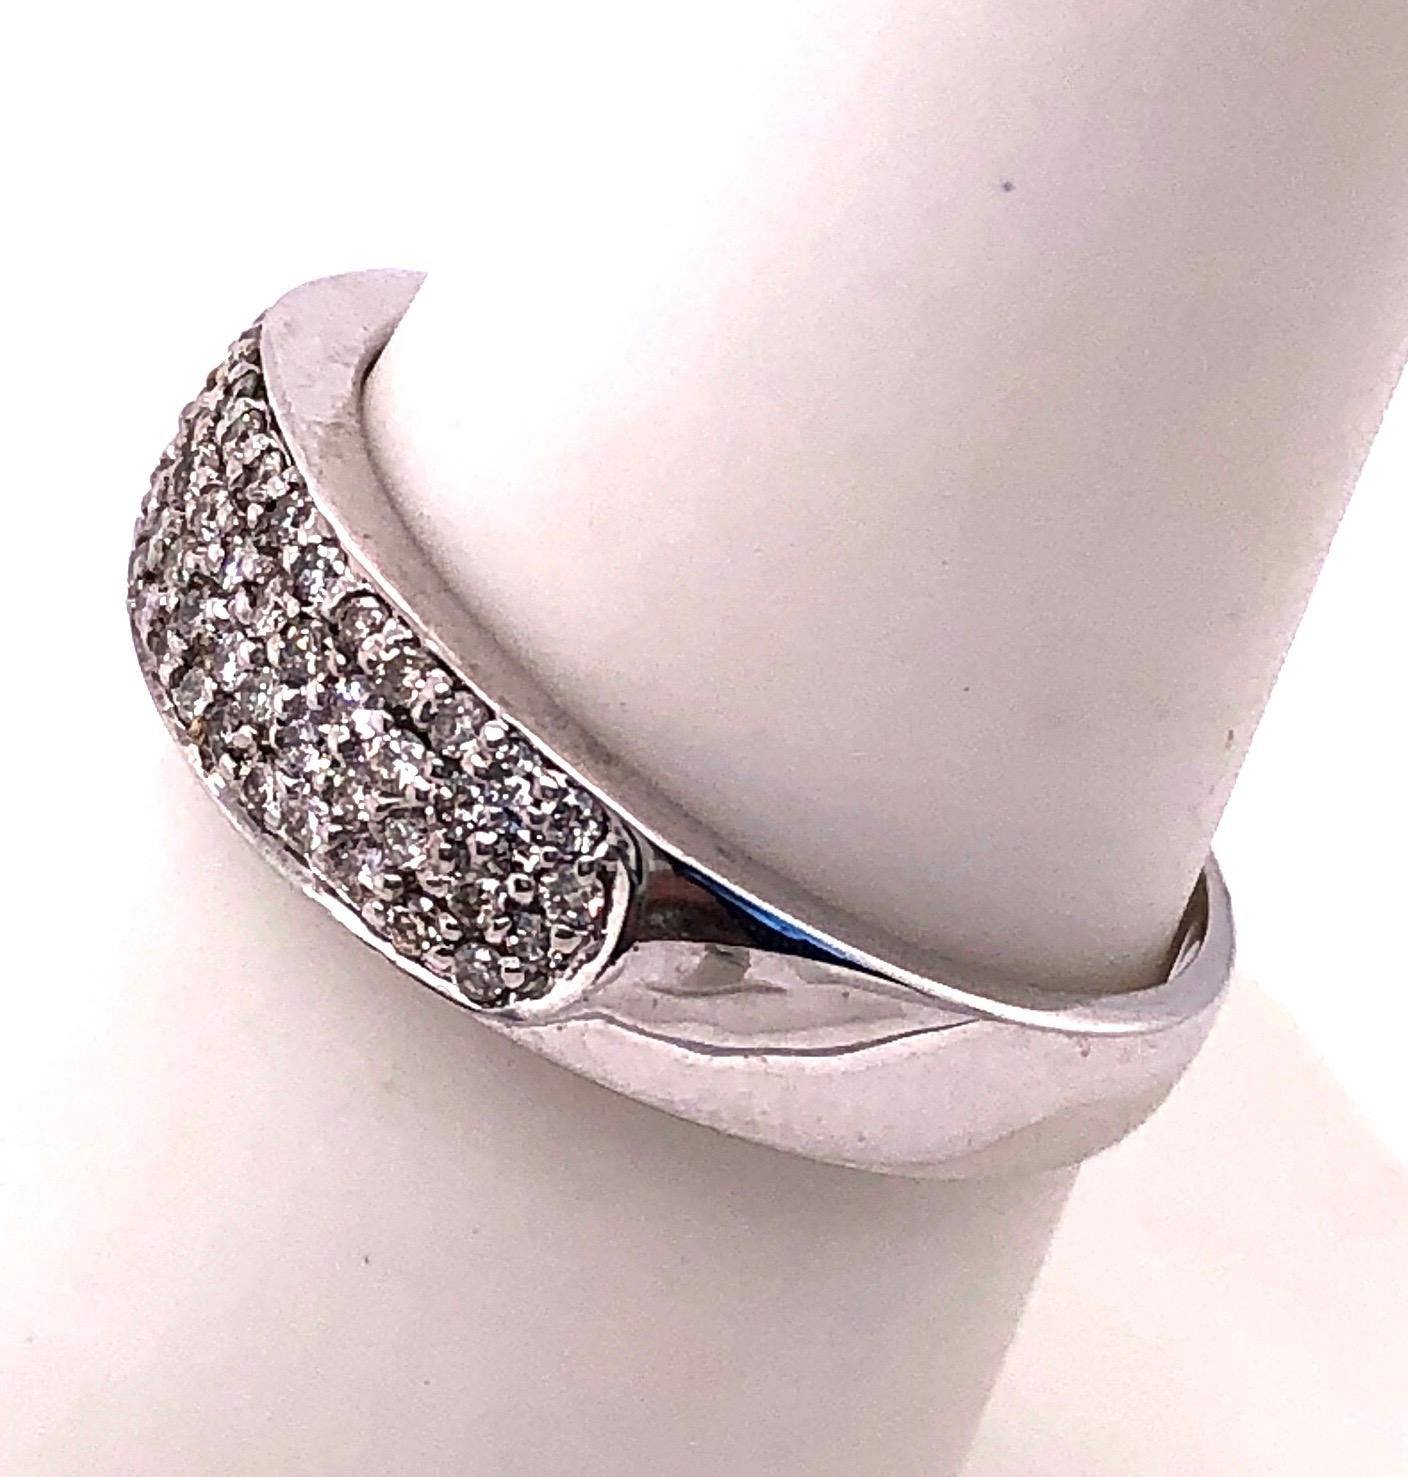 14 Karat White Gold Bridal Ring with Round Diamonds 1.00 Total Diamond Weight.
Taille 7.5
3,03 grammes de poids total.